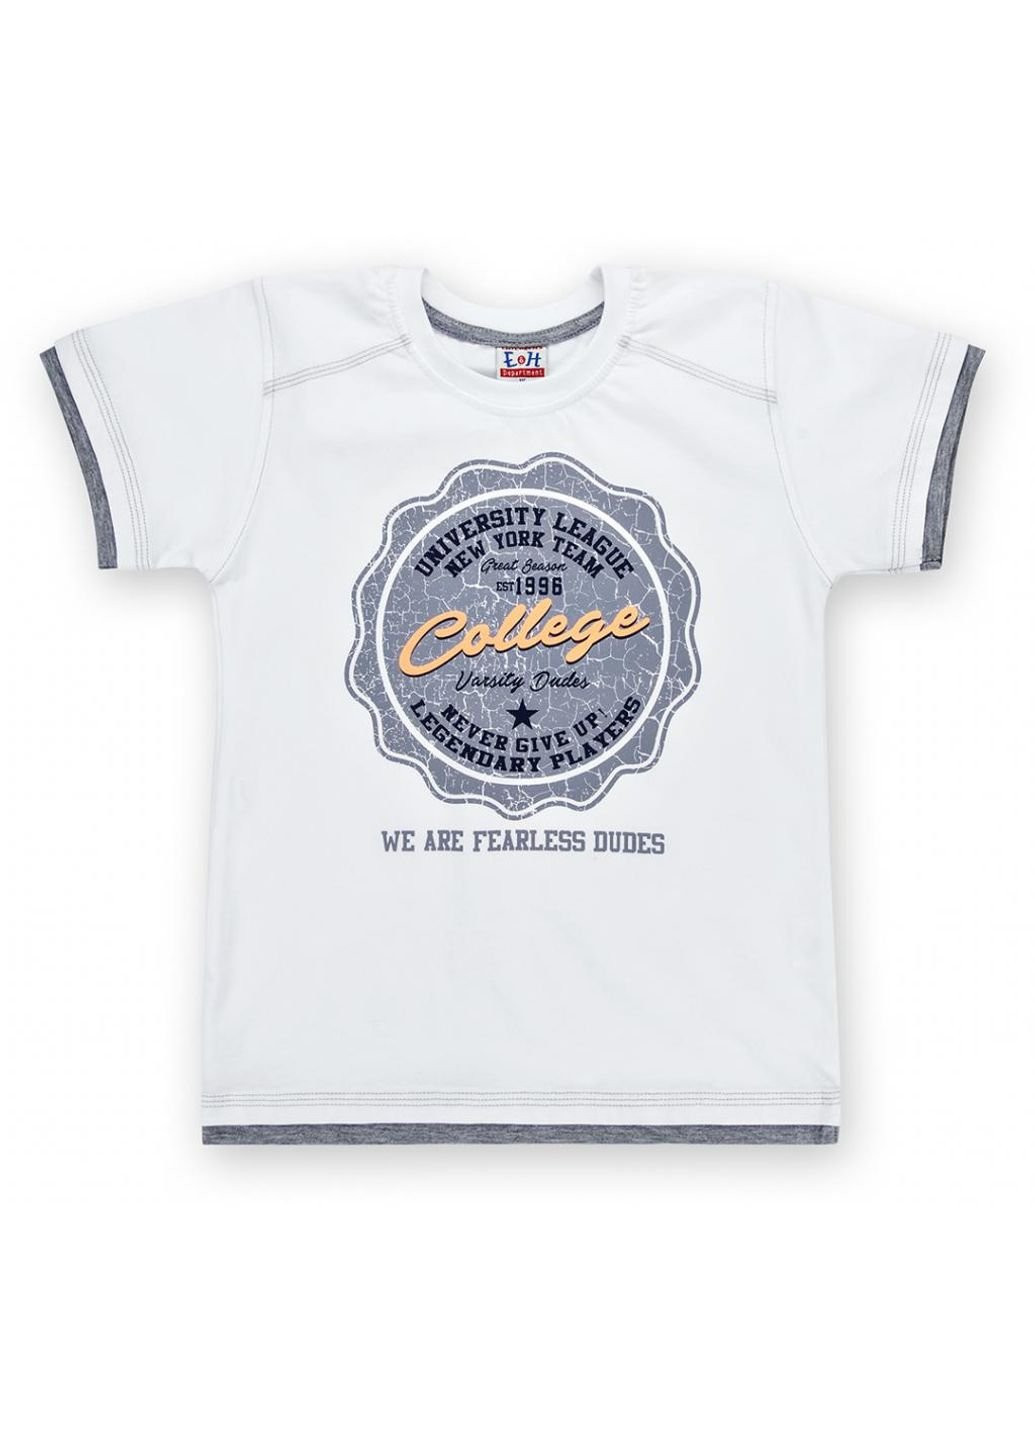 Белая демисезонная футболка детская "college" (4678-140b-white) E&H